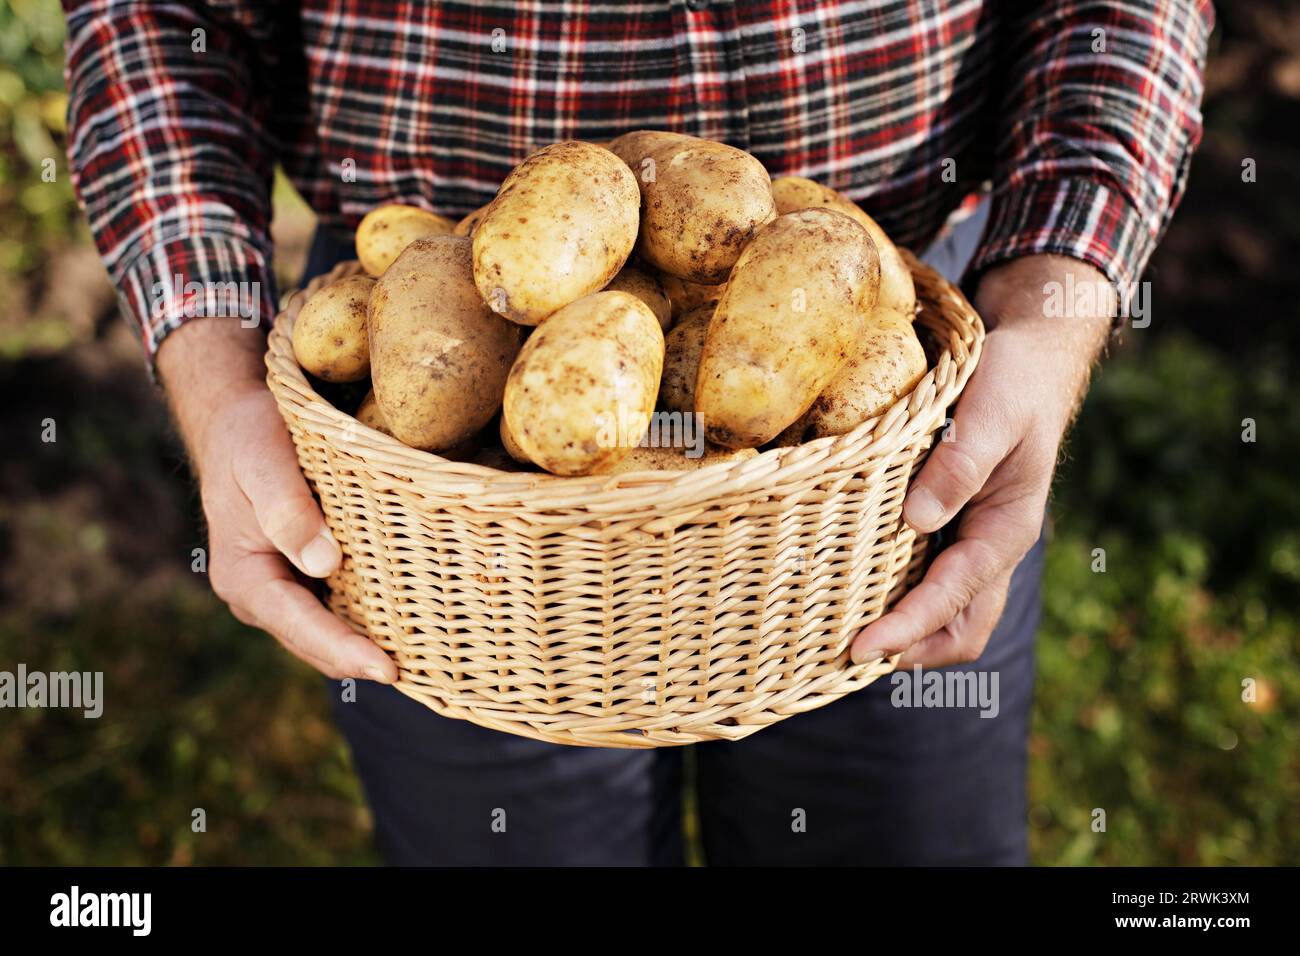 Farmer holding a basket full of harvested potatoes Stock Photo